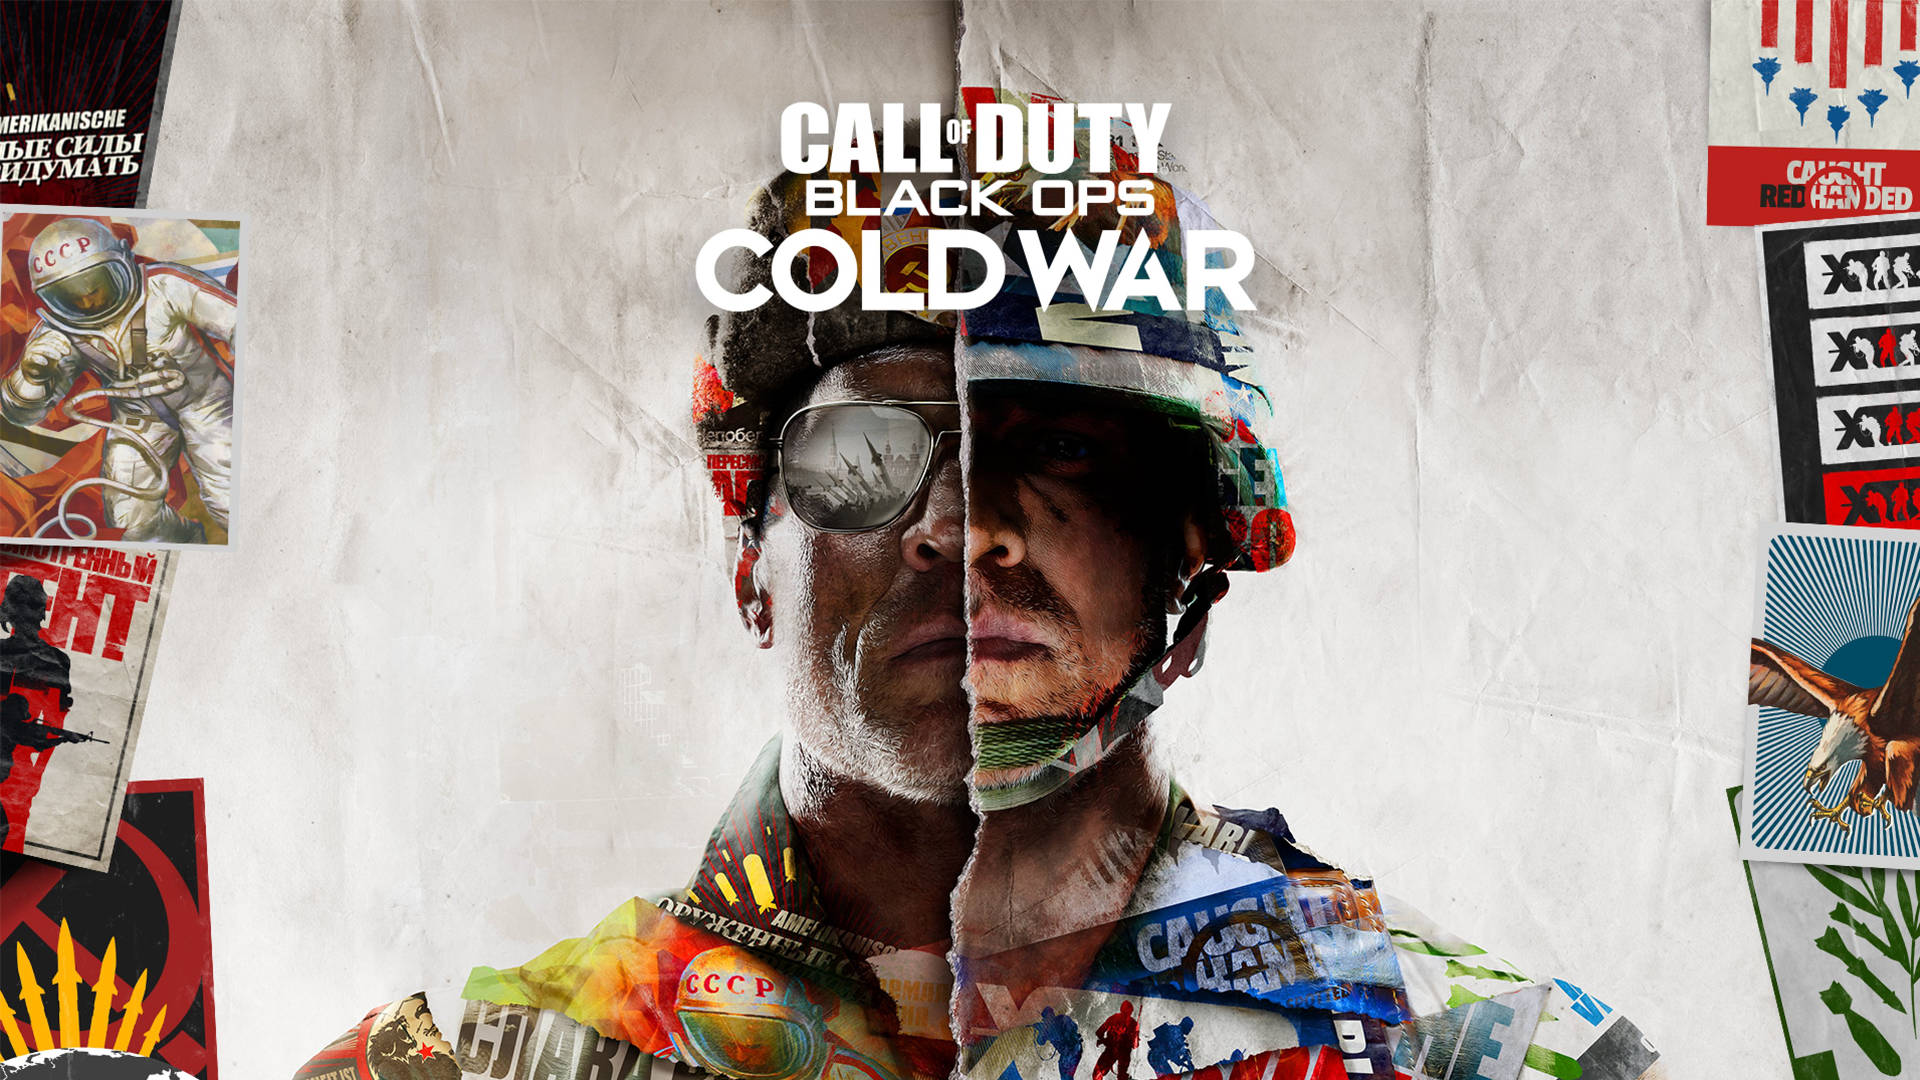 Call Of Duty Black Ops Kolde Krig Wallpaper